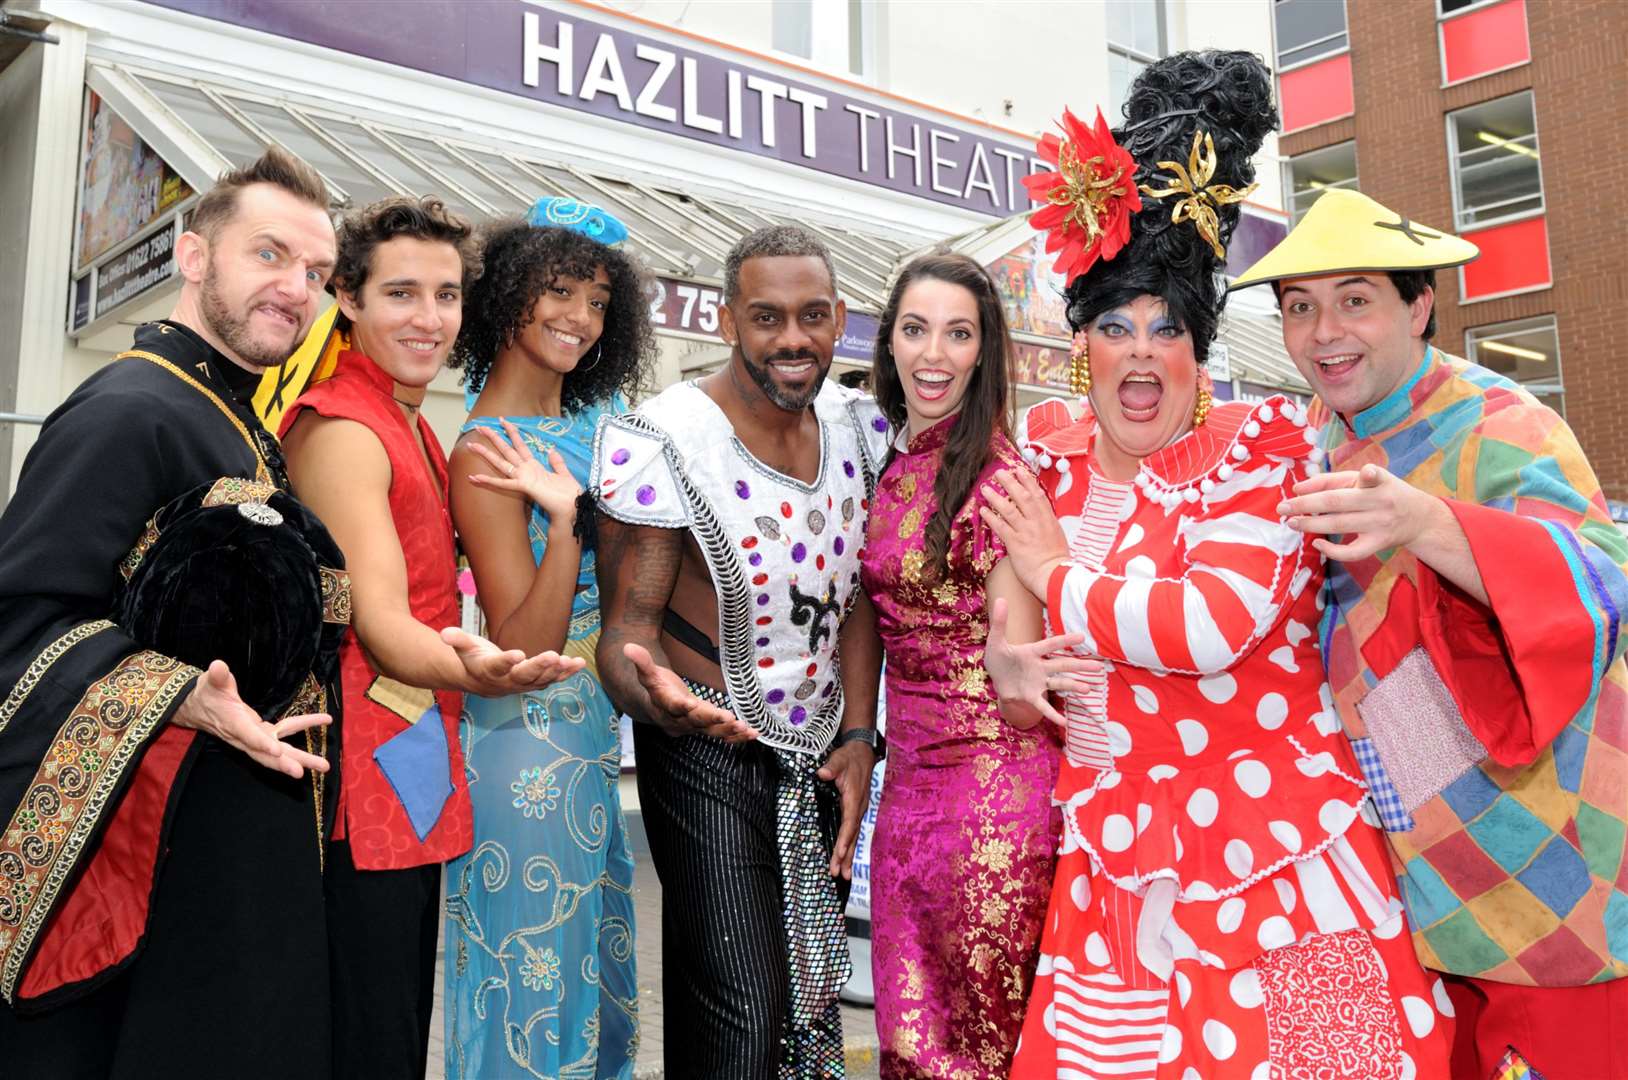 The cast of Aladdin at the Hazlitt Theatre